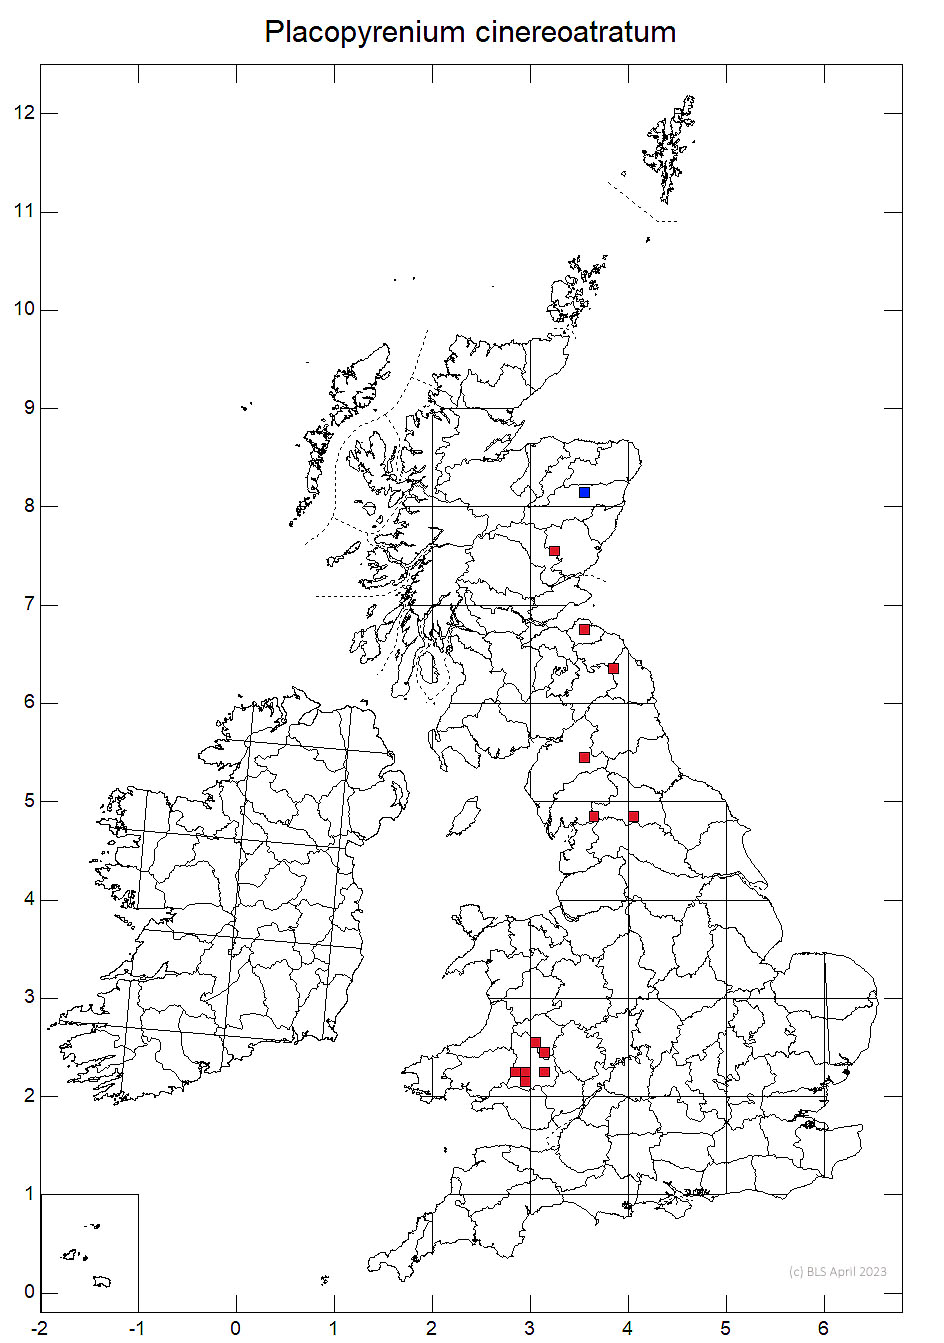 Placopyrenium cinereoatratum 10km sq distribution map